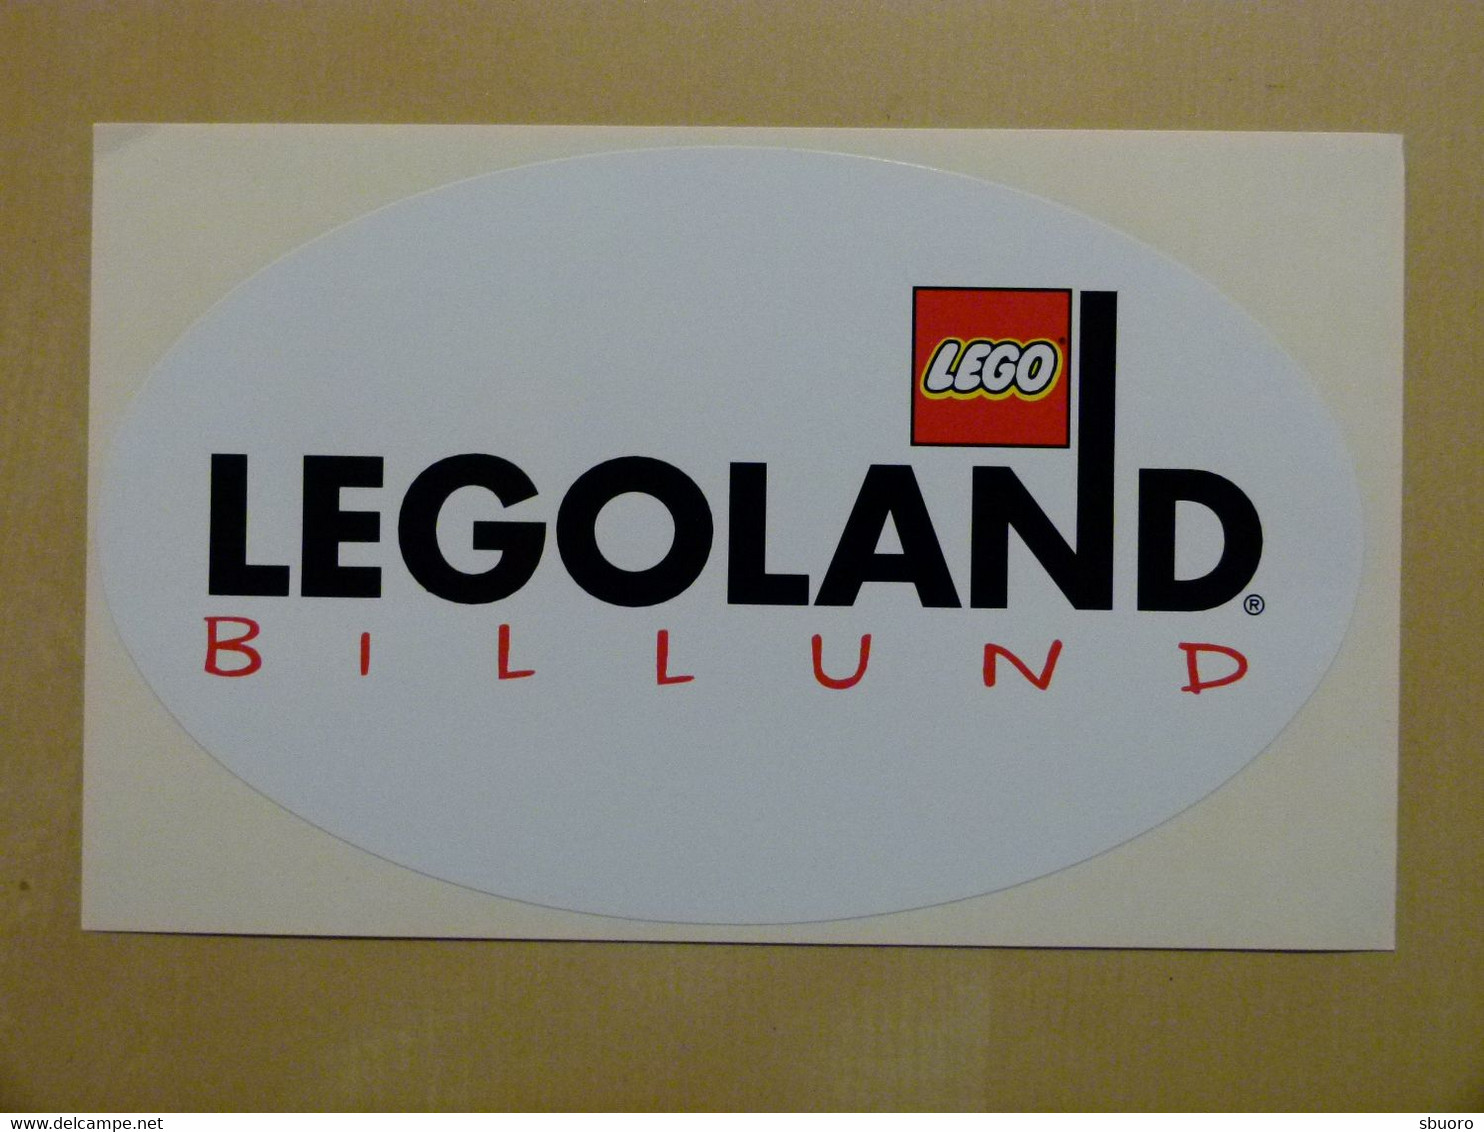 Legoland Billund Danemark Danmark Denmark. Autocollant Sticker Ovale De Plus Grandes Dimensions 14 Cm X 8,5 Cm - Unclassified